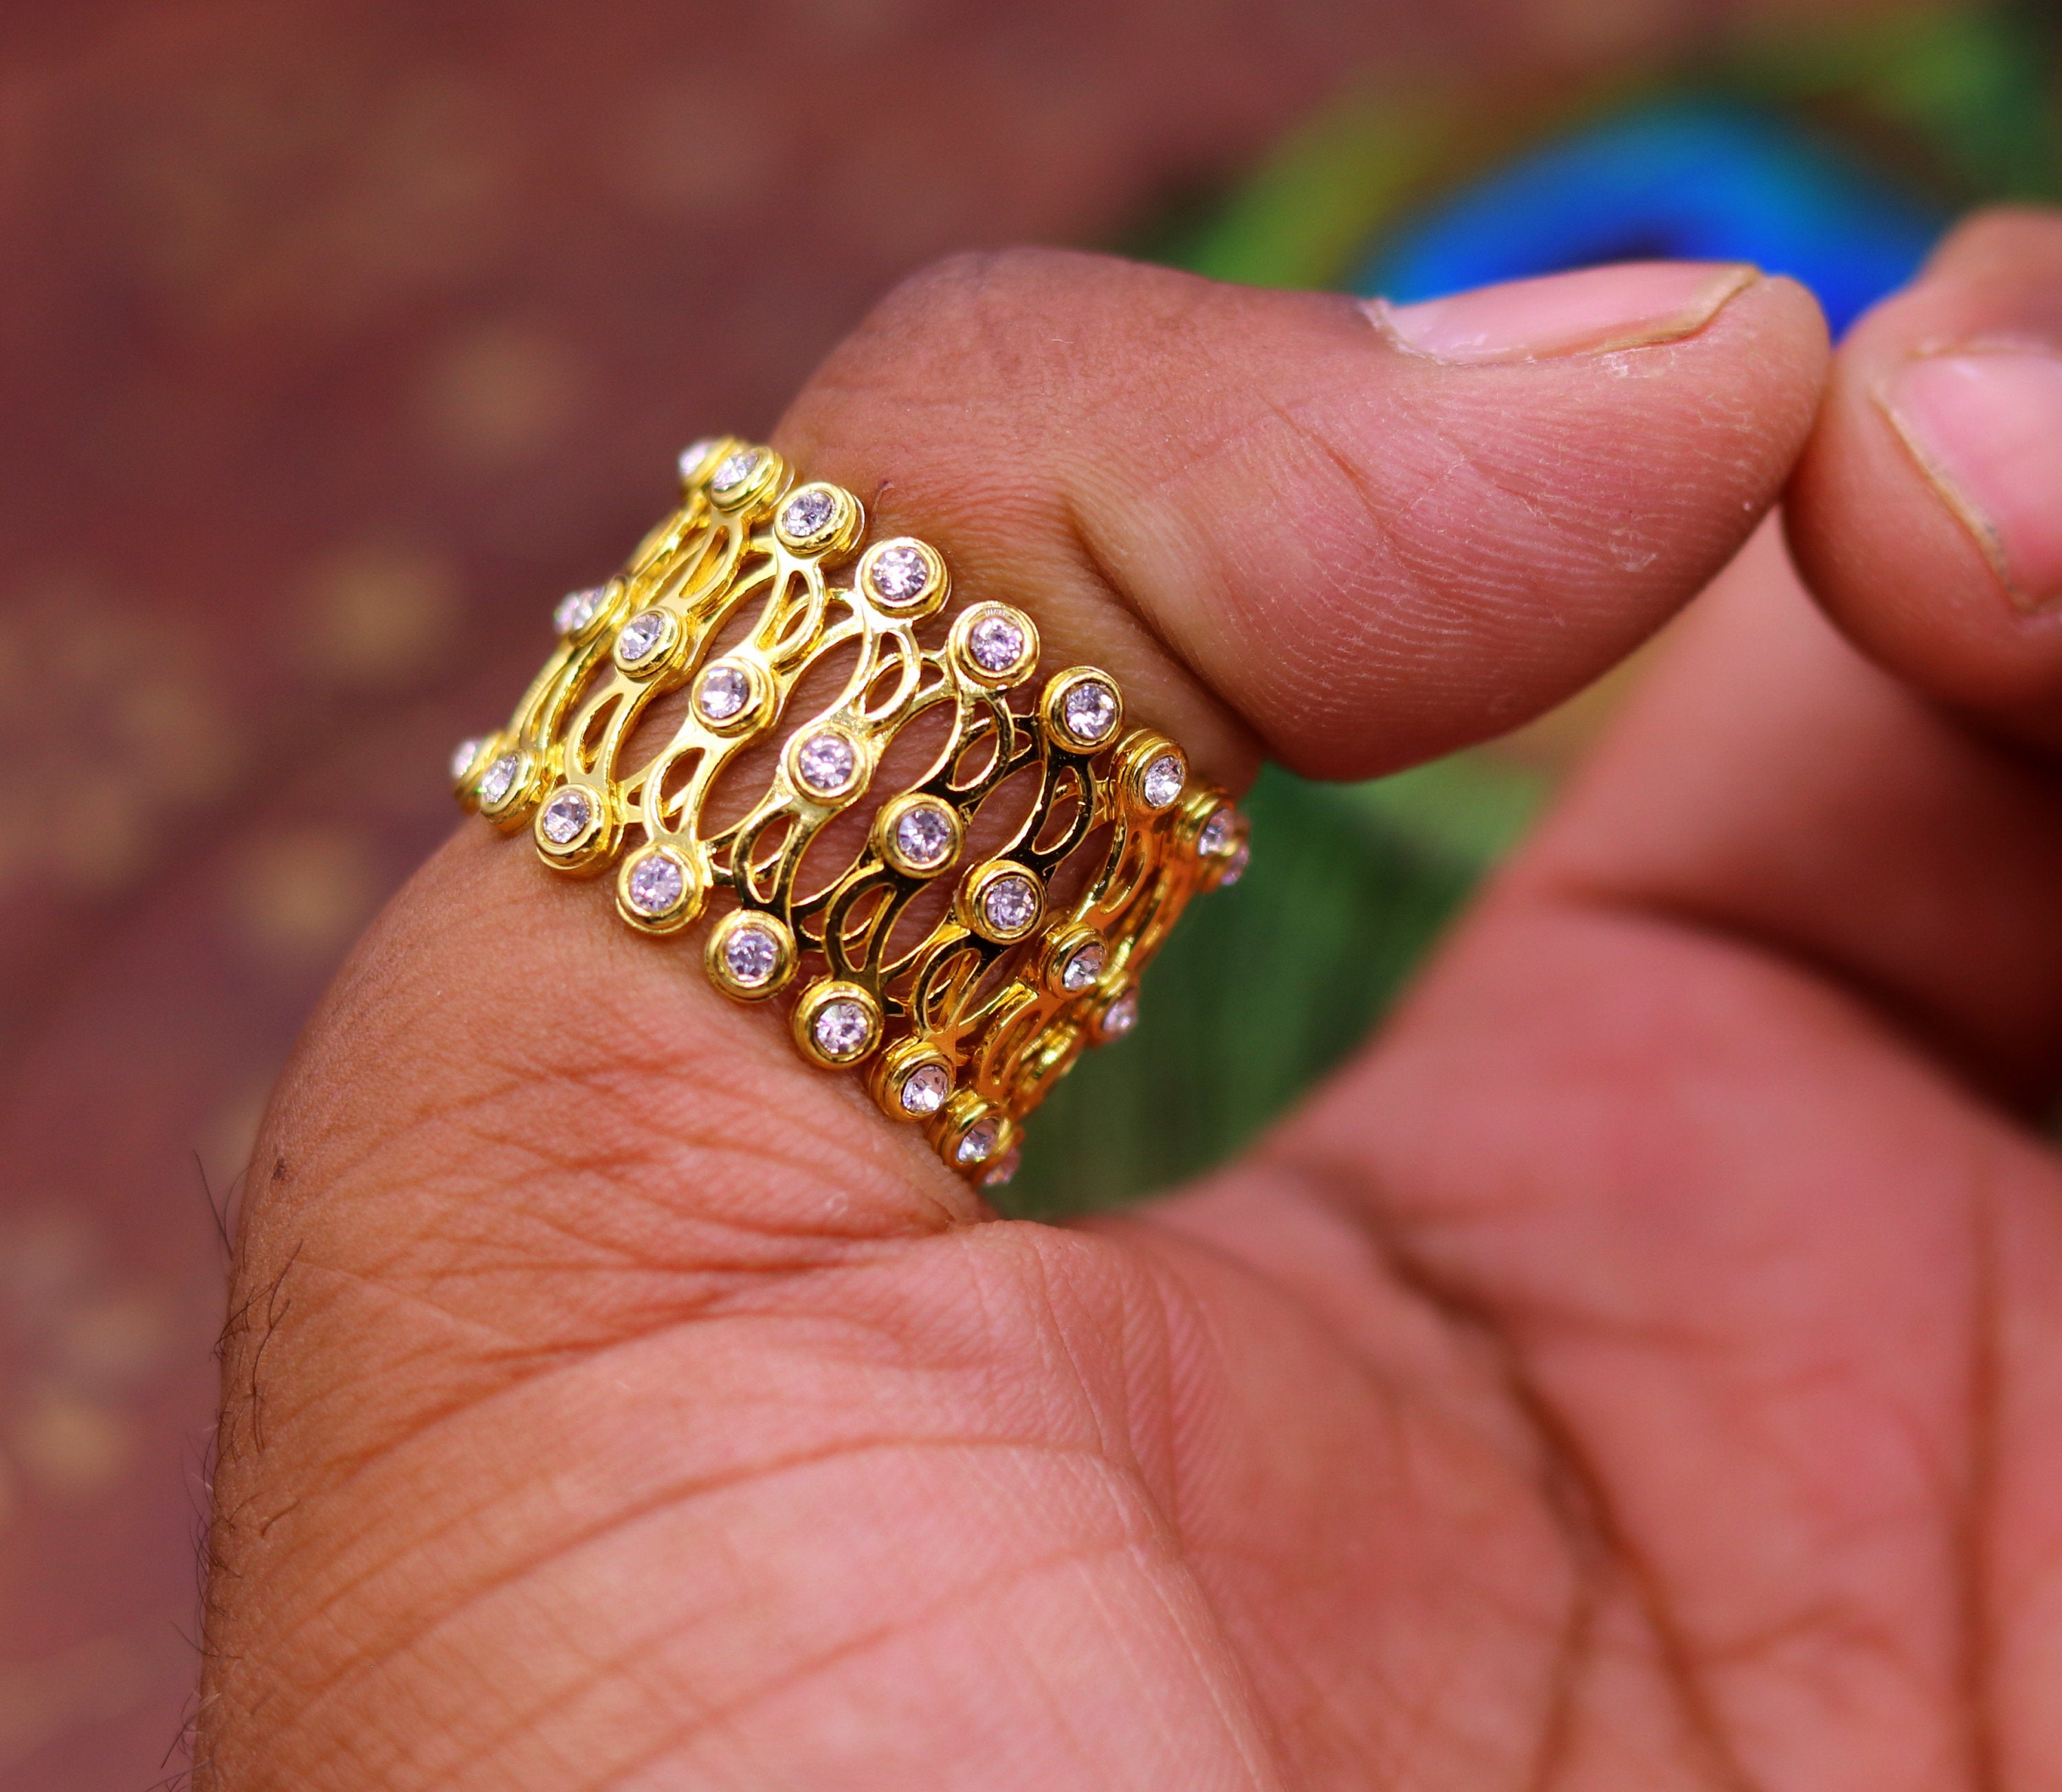 Rings for Men Stainless Steel Ring Silver GOLD Toned Design Band Finger Ring  for Men and Boys.